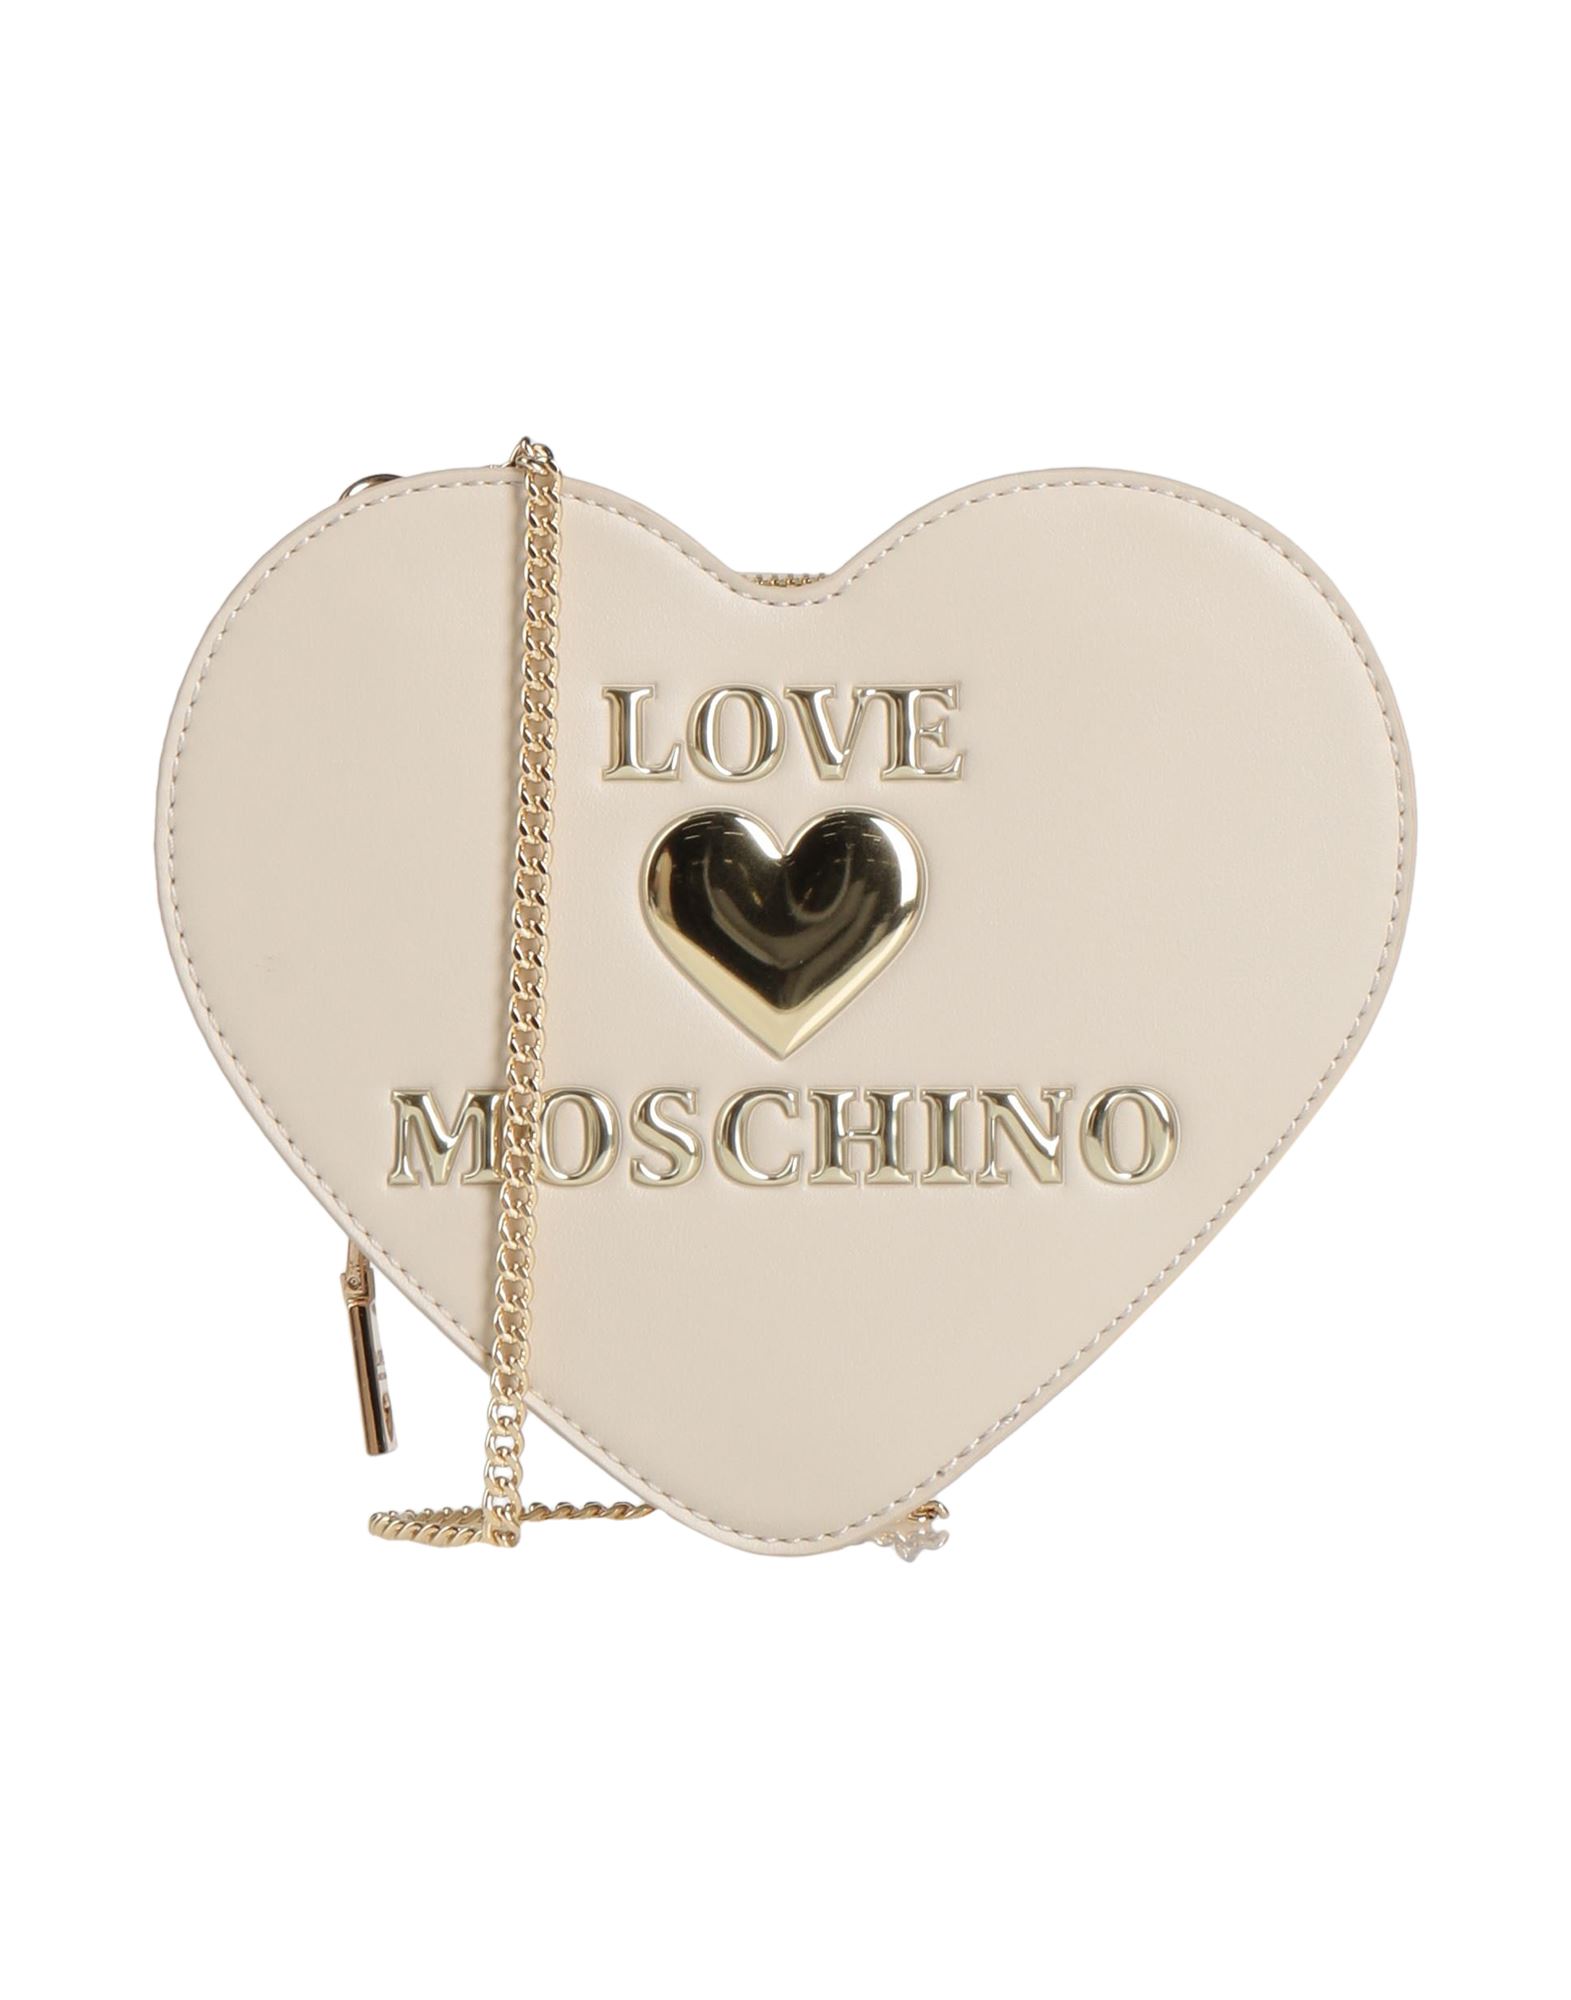 Love Moschino Handbags In Ivory